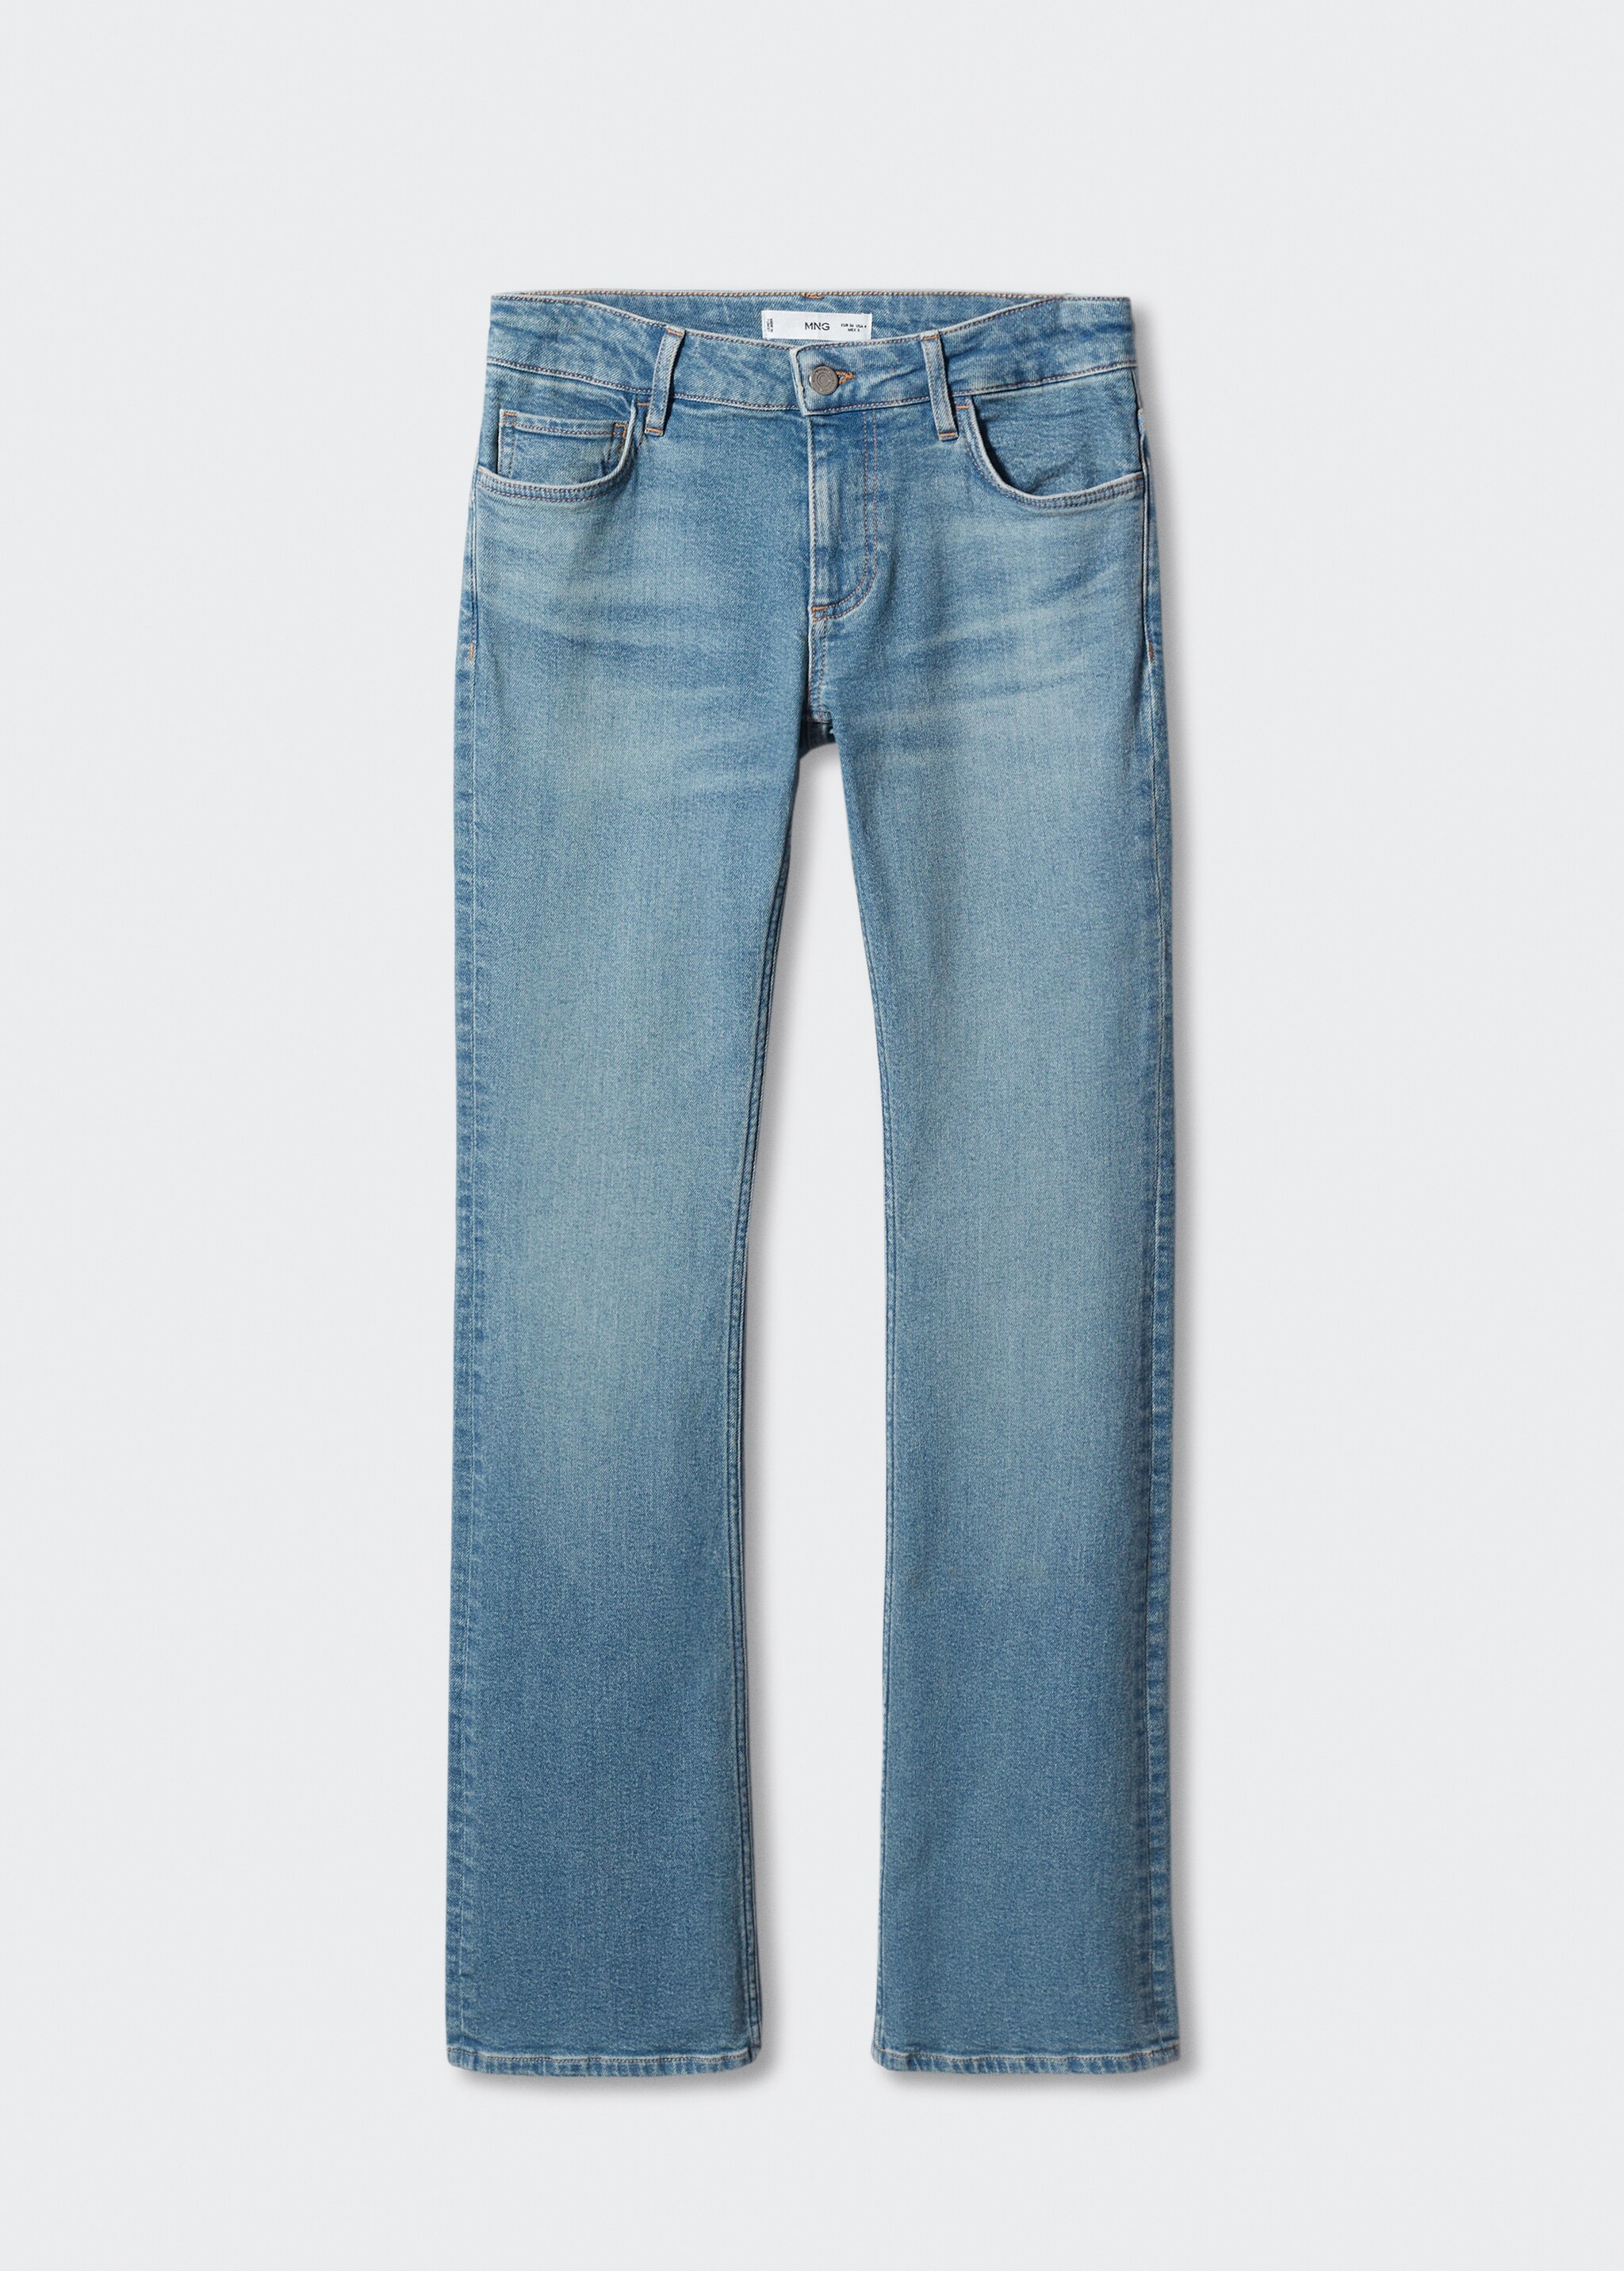 Jeans flare tiro bajo - Artículo sin modelo